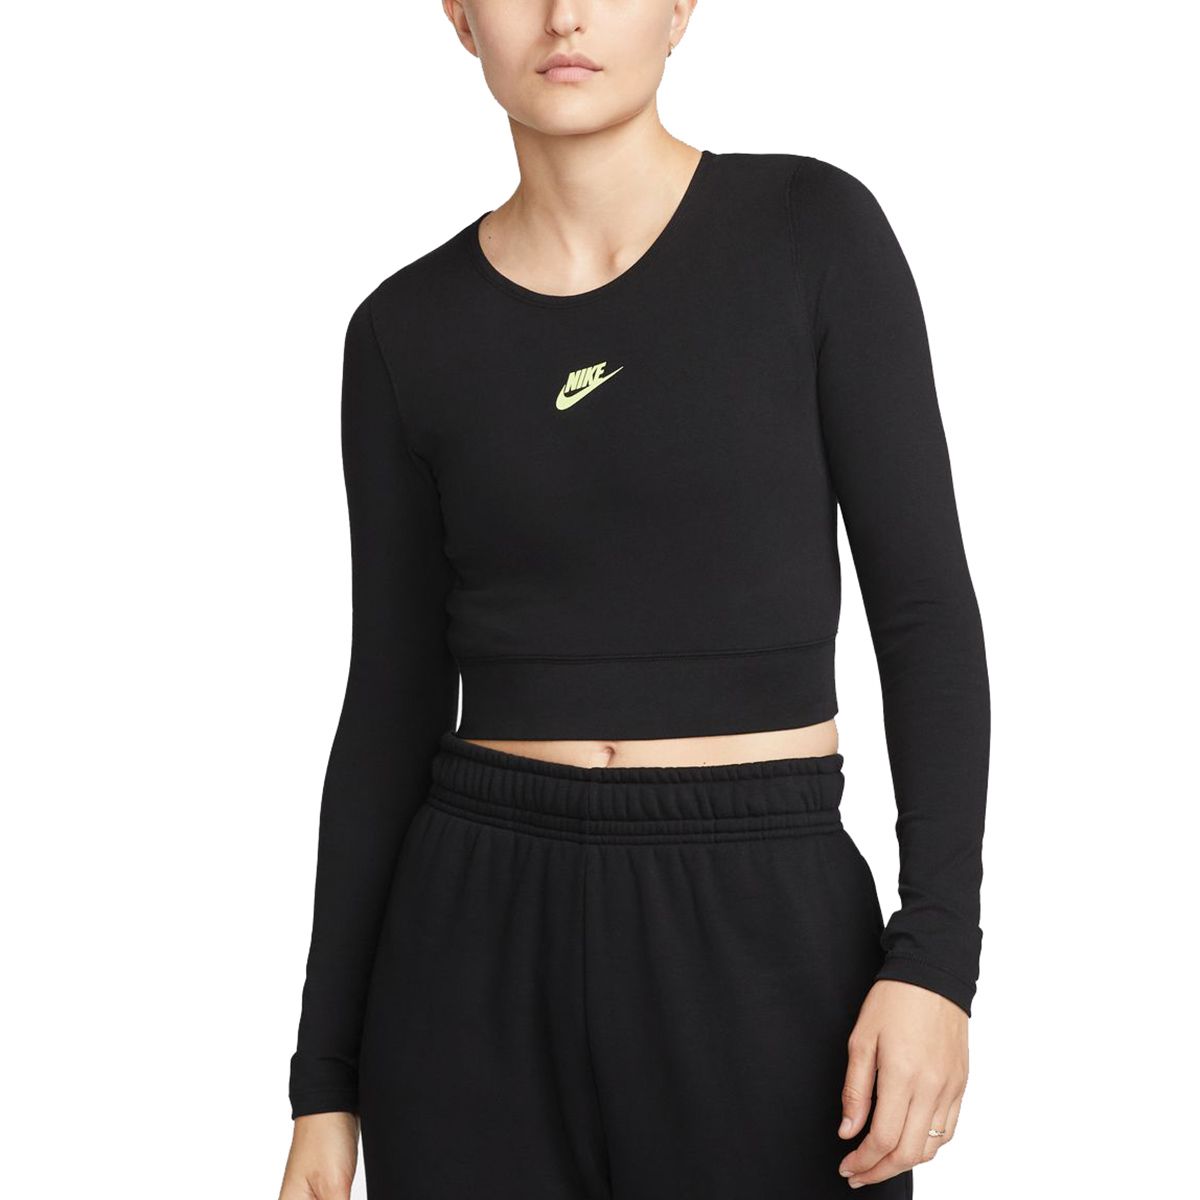 Discriminar George Eliot Novedad Nike Sportswear Women's Long-Sleeve Dance Crop Top DZ4608-01